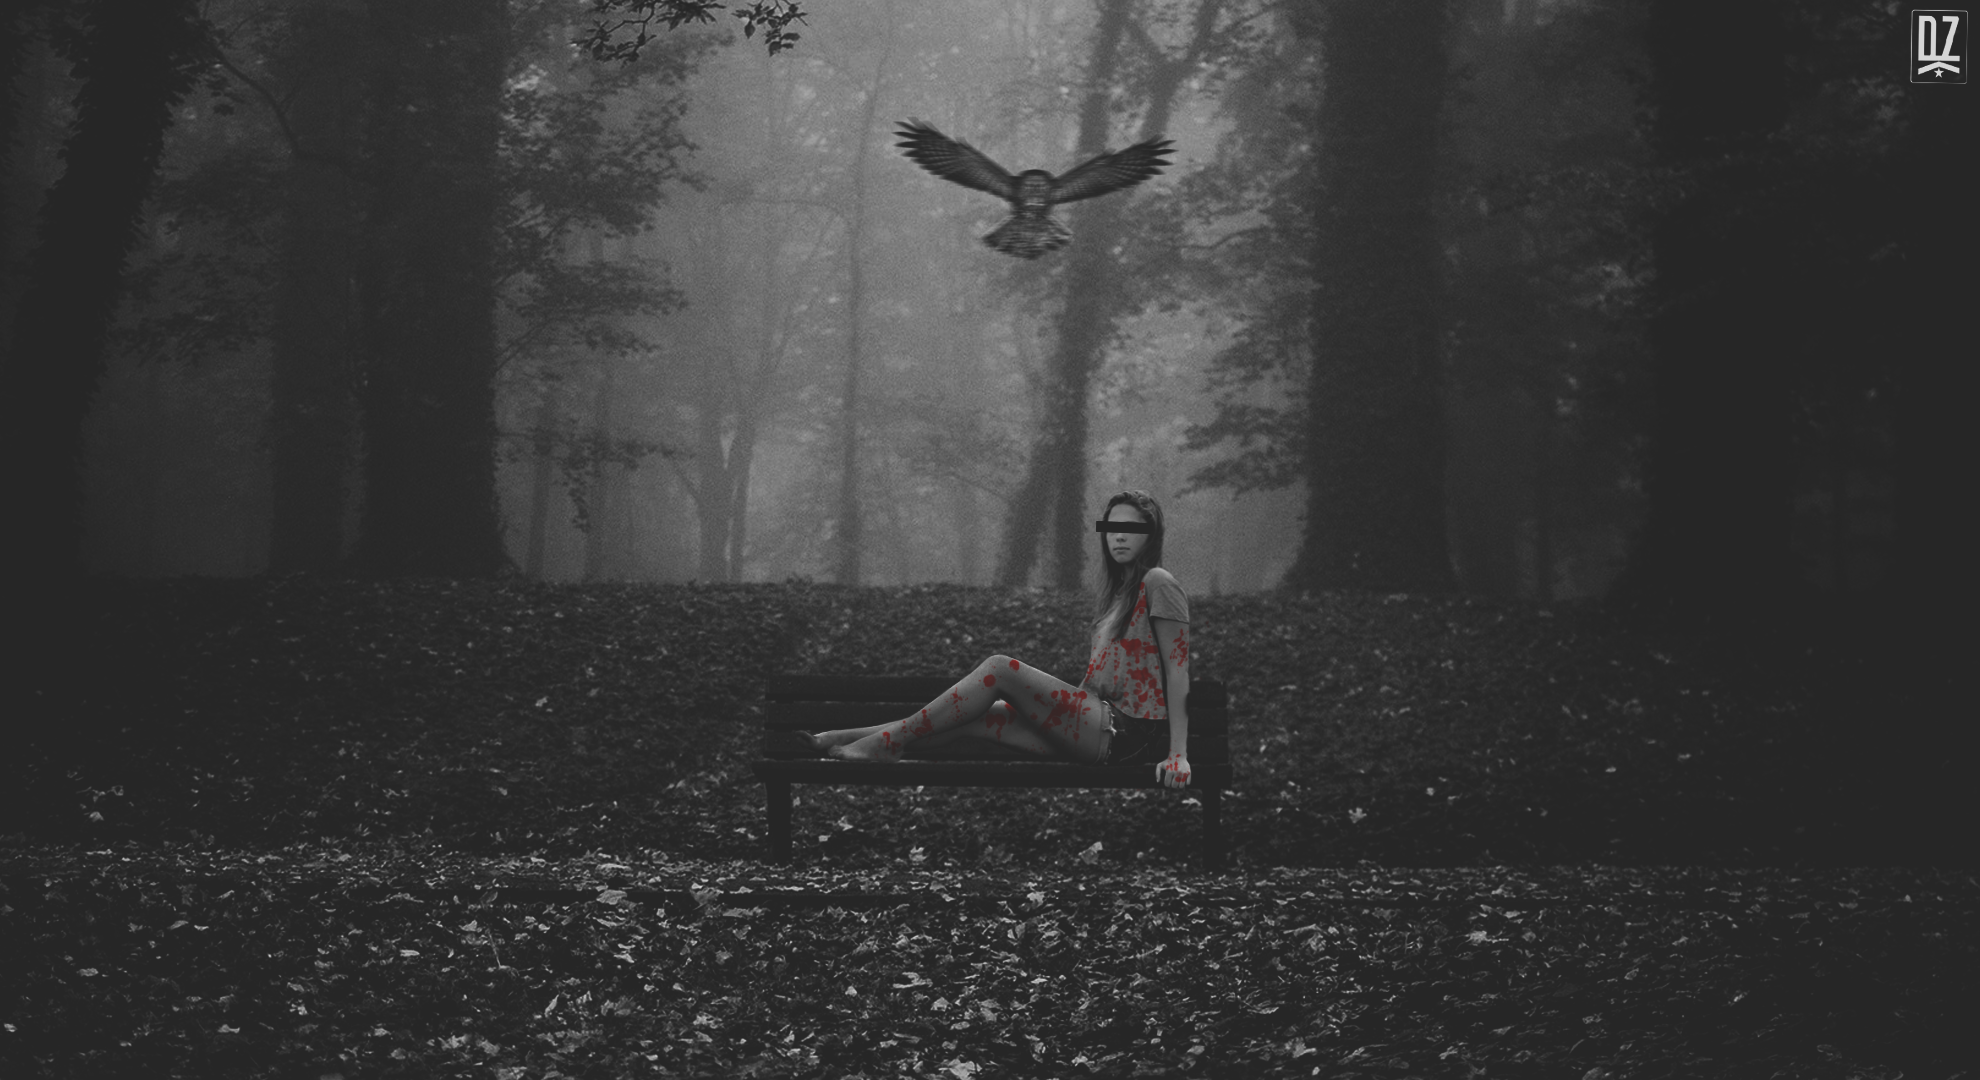 General 1980x1080 photoshopped photo manipulation women owl nature women outdoors bird of prey forest blood horror